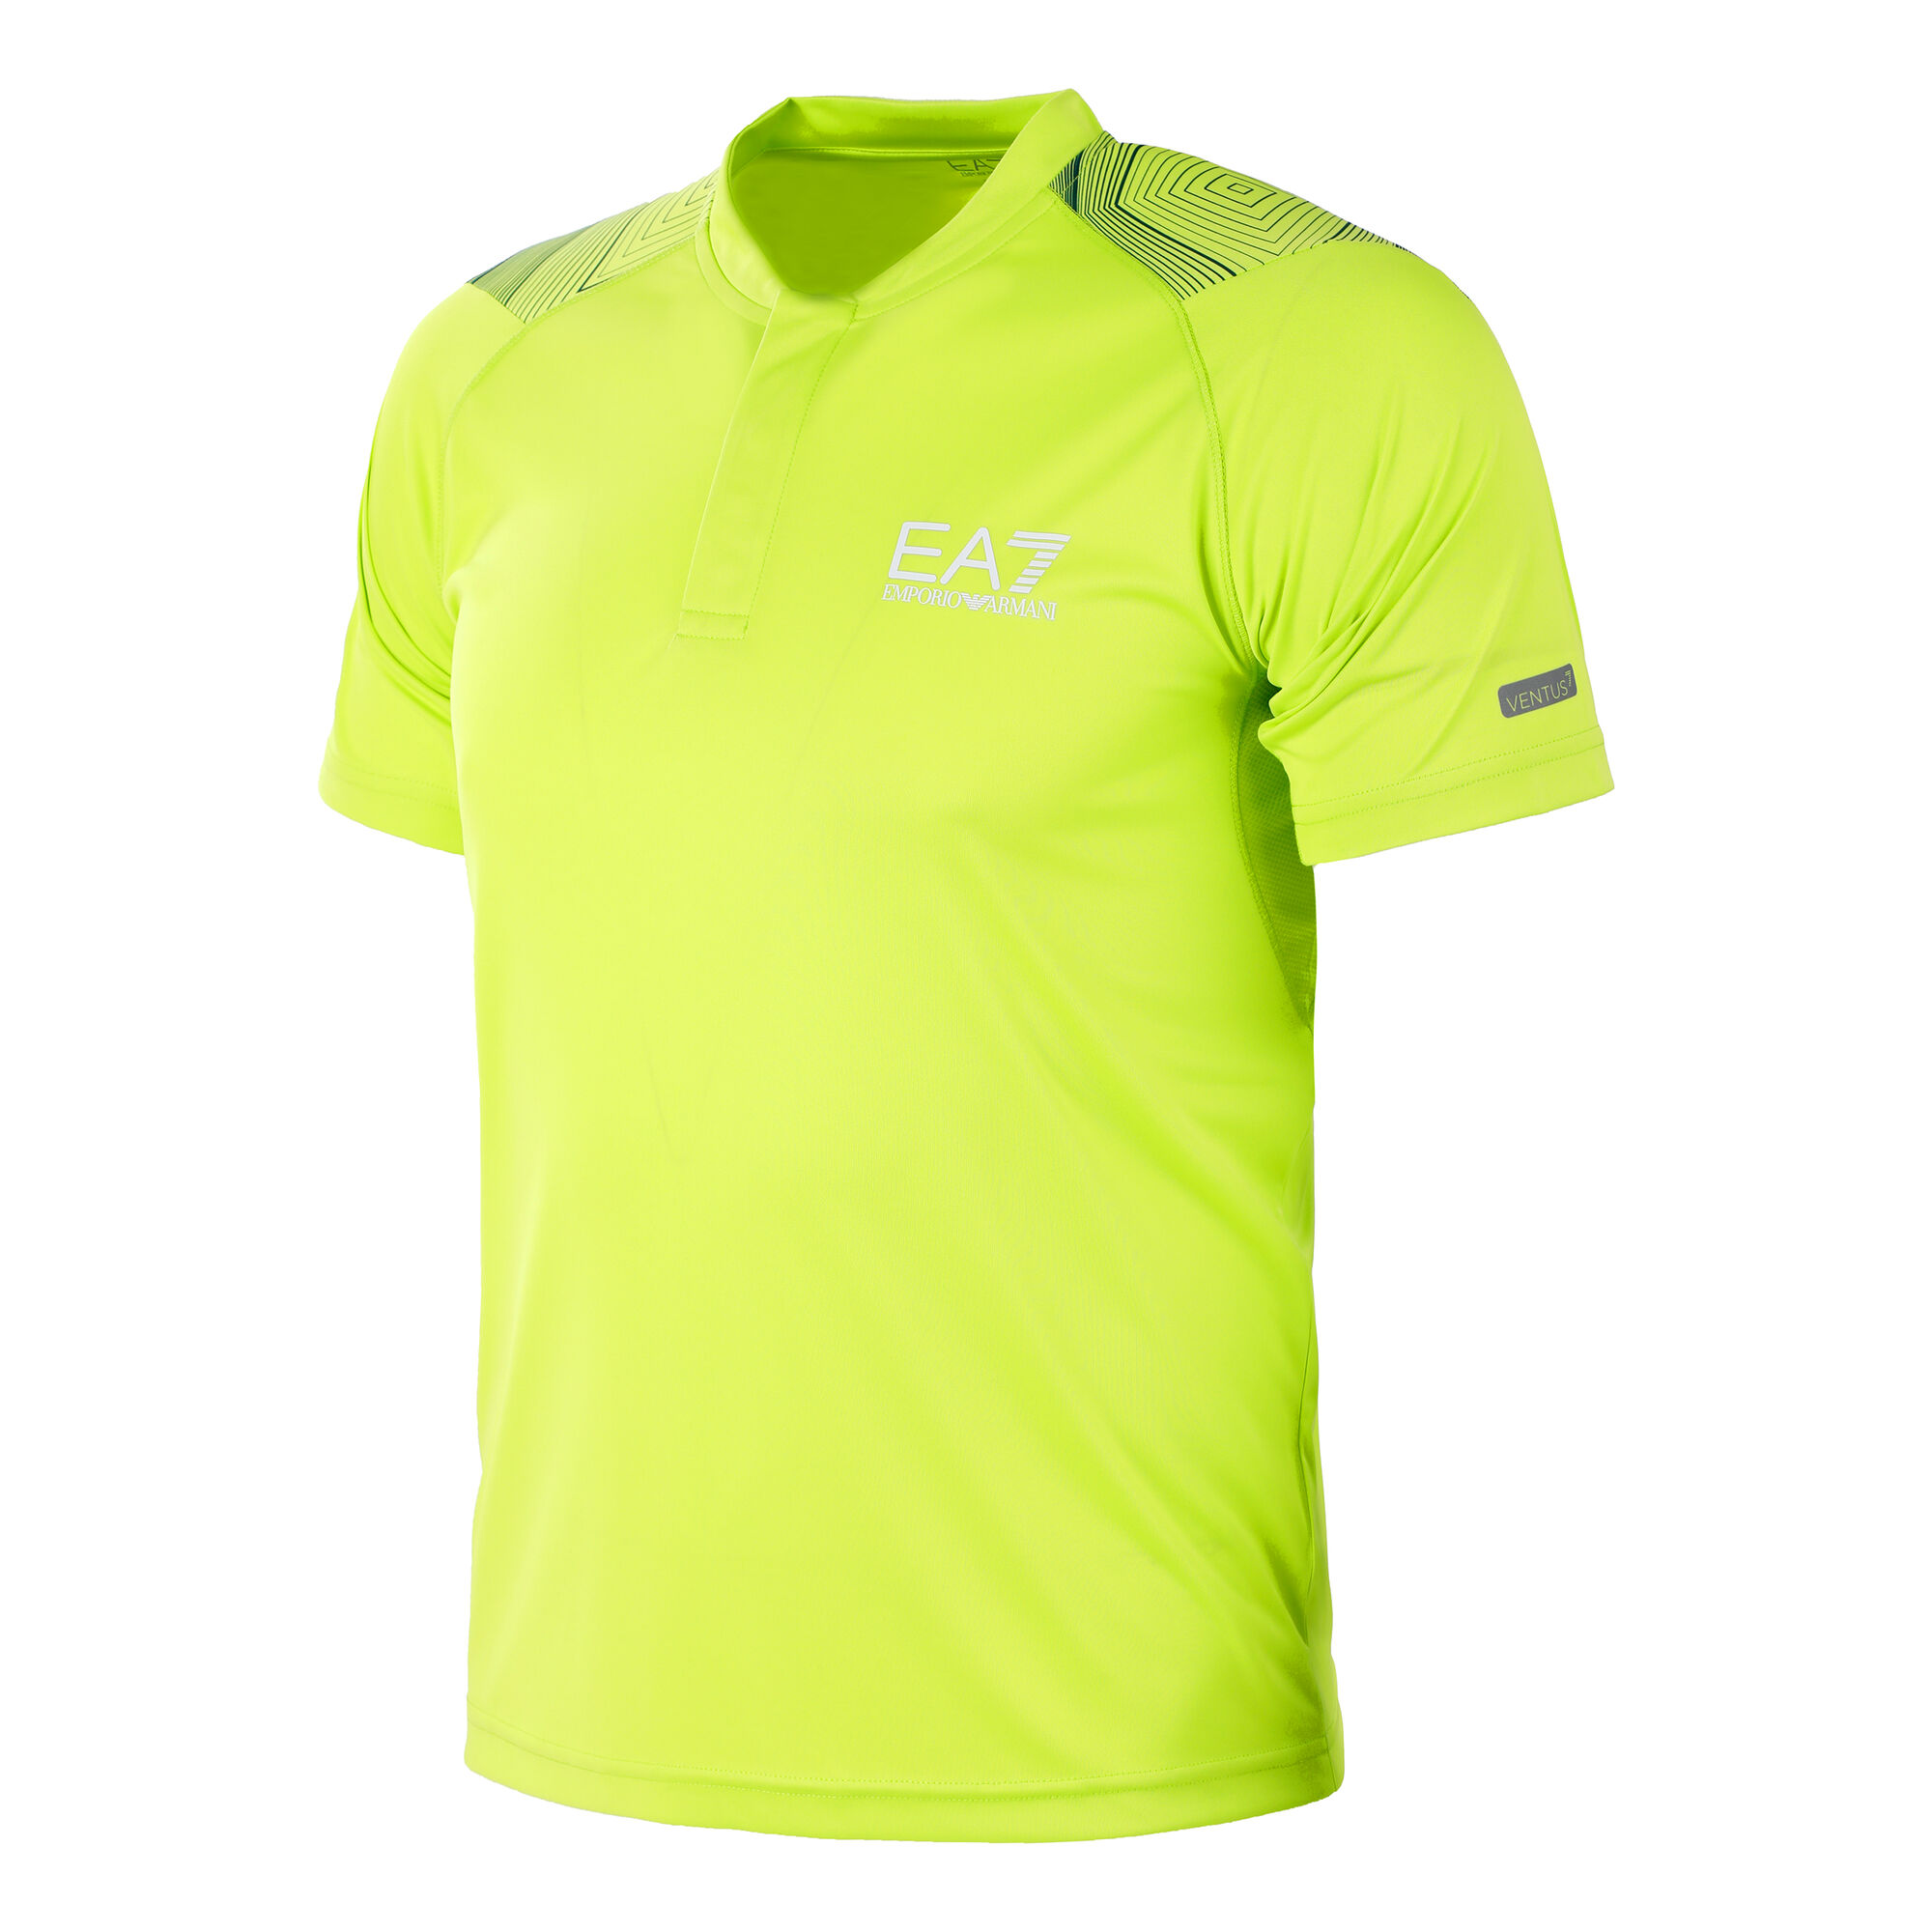 buy EA7 SB T-Shirt Men - Lime, Black online | Tennis-Point